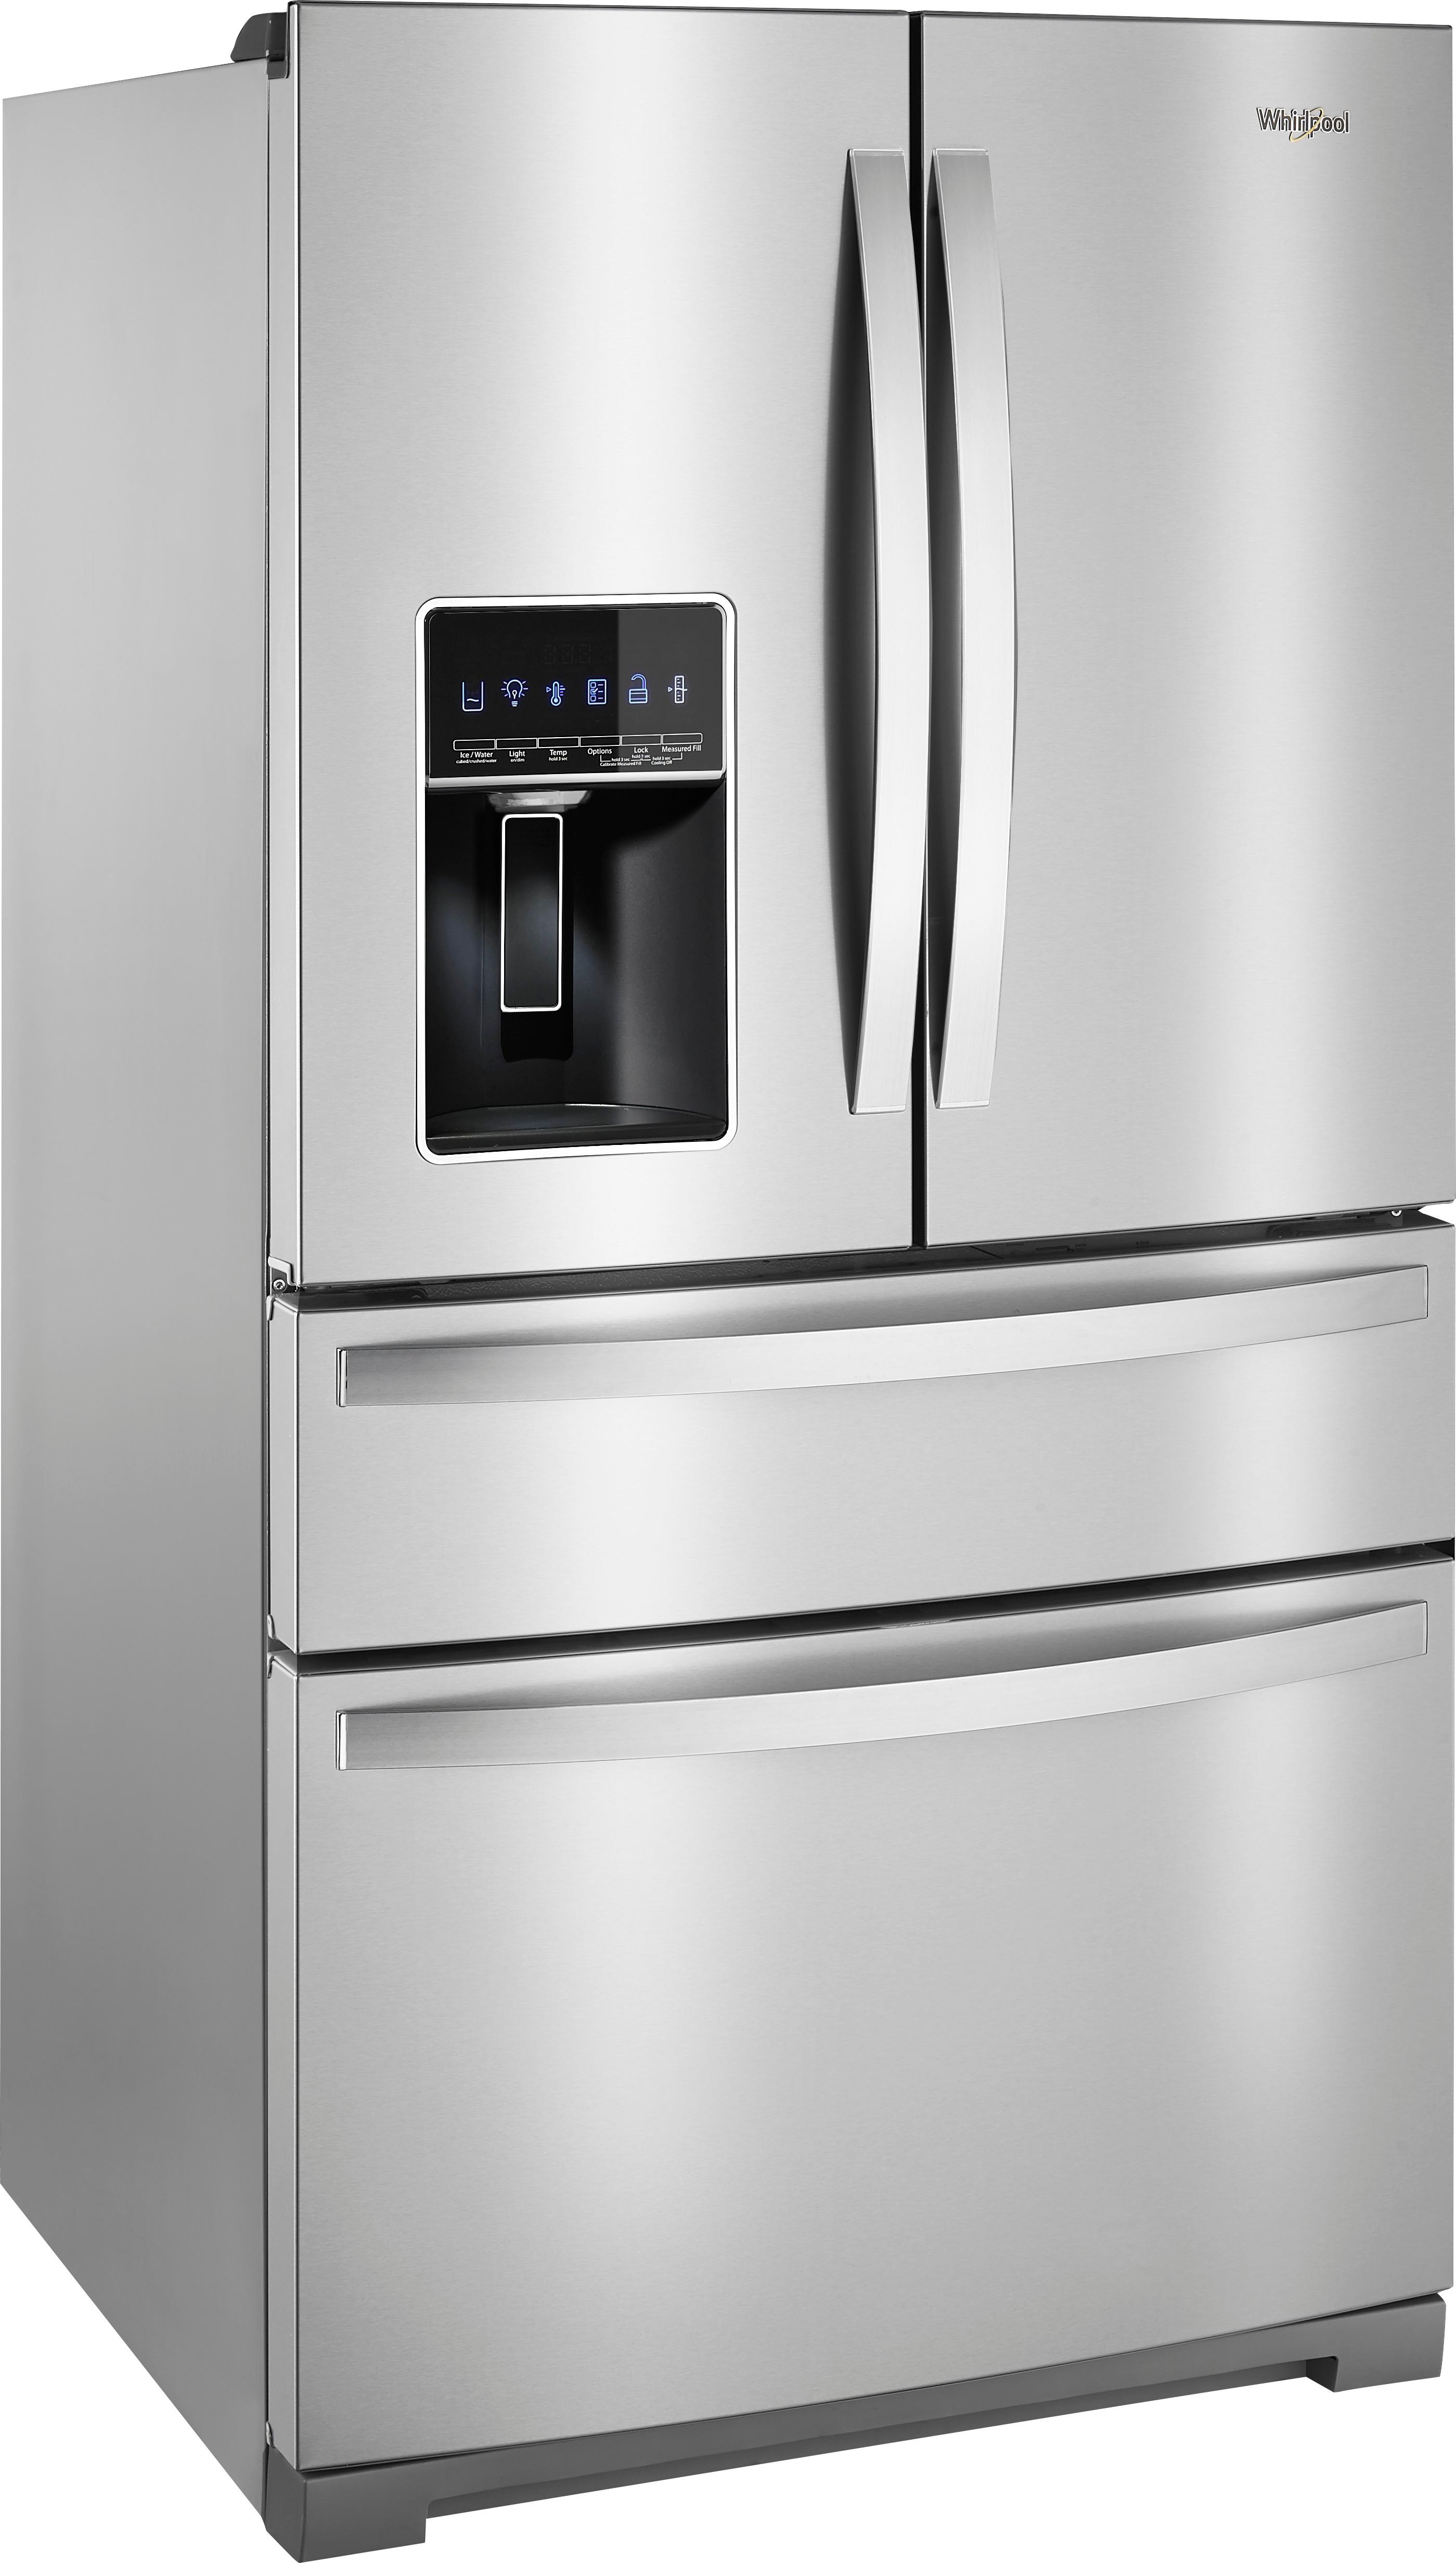 Whirlpool 26.2 Cu. Ft. 4-Door French Door Refrigerator Stainless steel Best Buy Stainless Steel Refrigerator